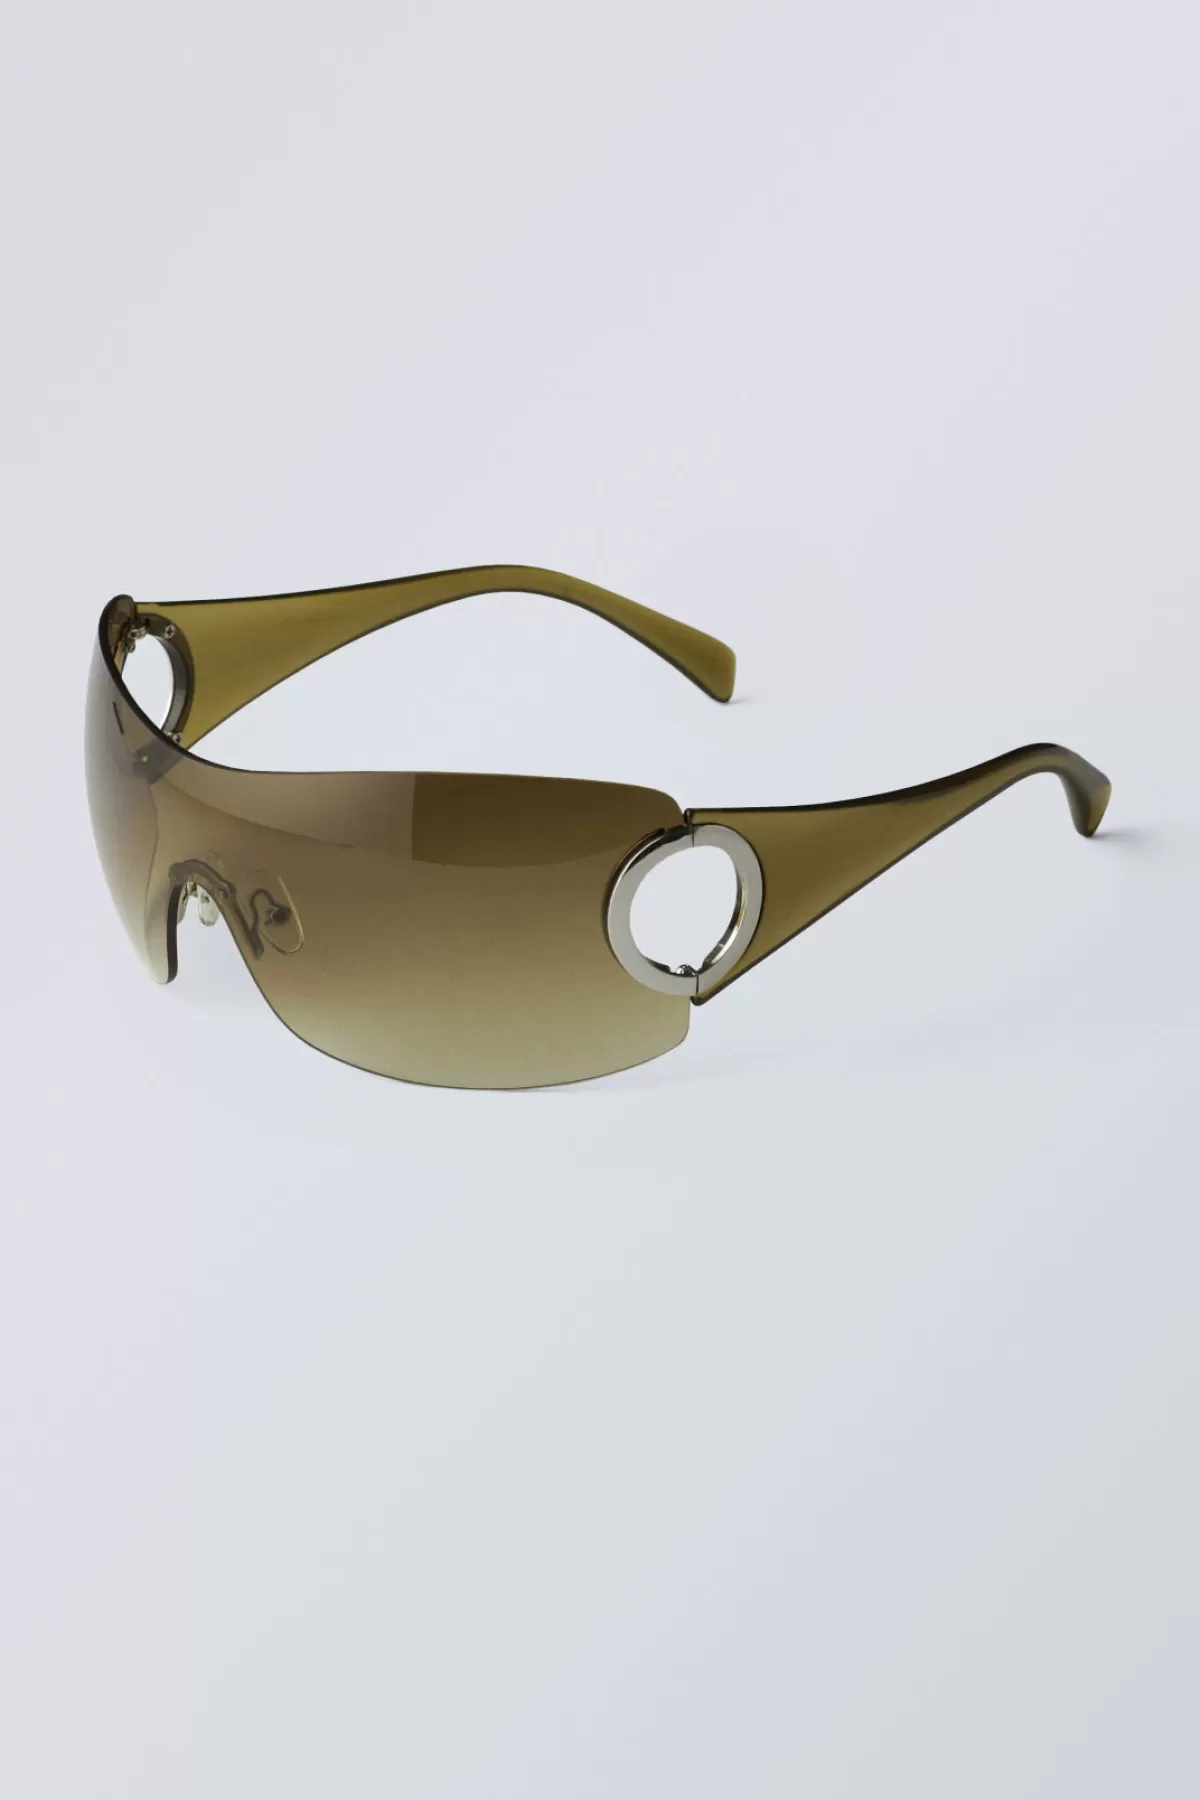 Weekday Motion Sunglasses Khaki Outlet